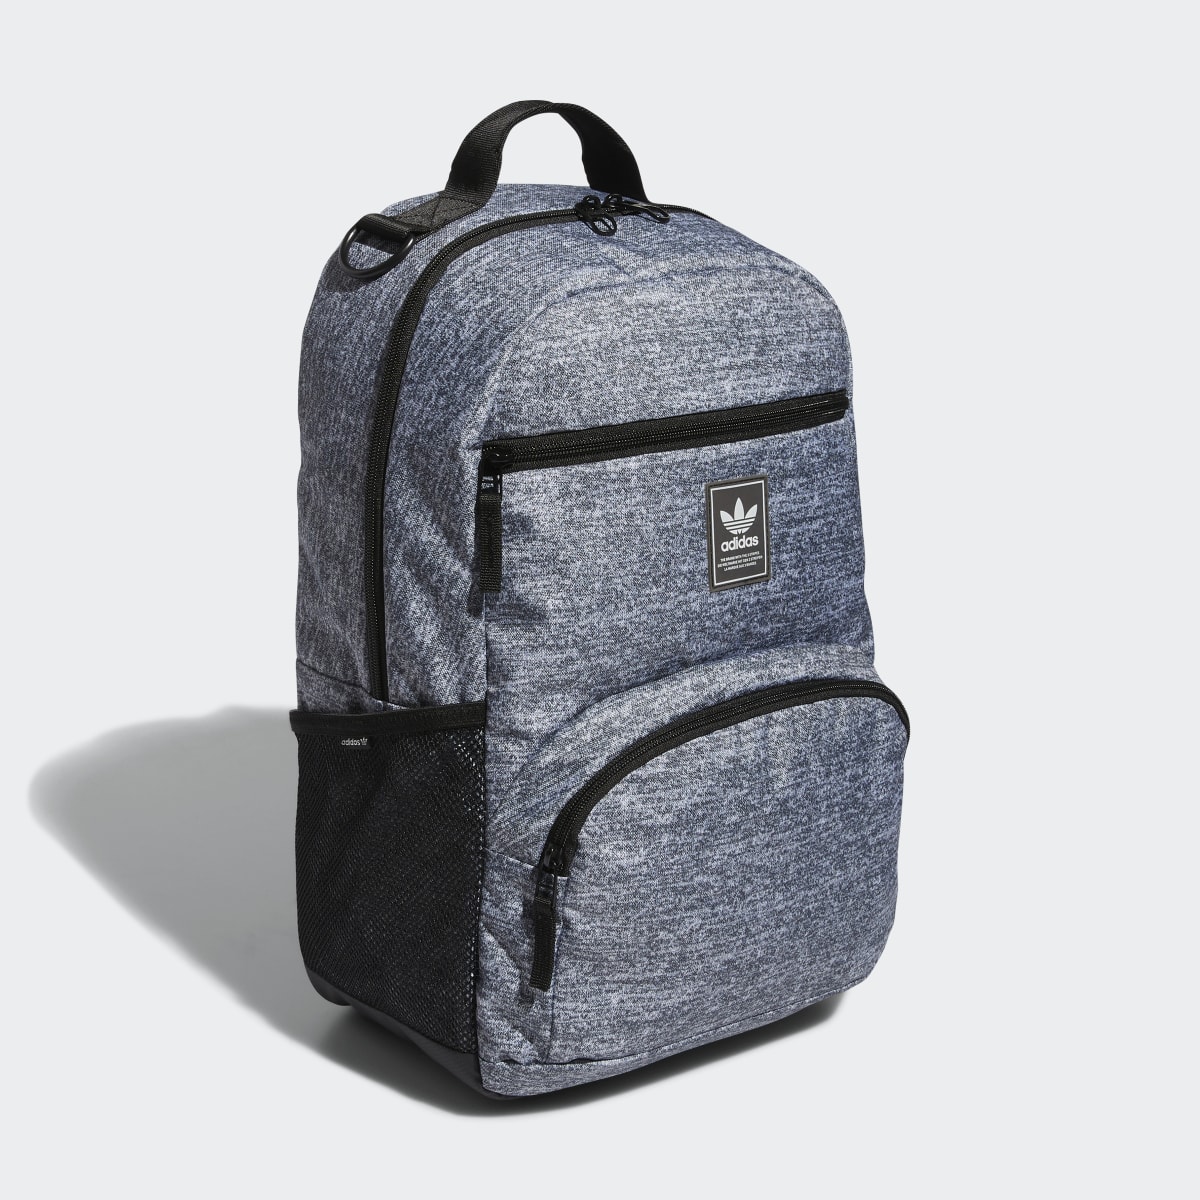 Adidas National Backpack. 4